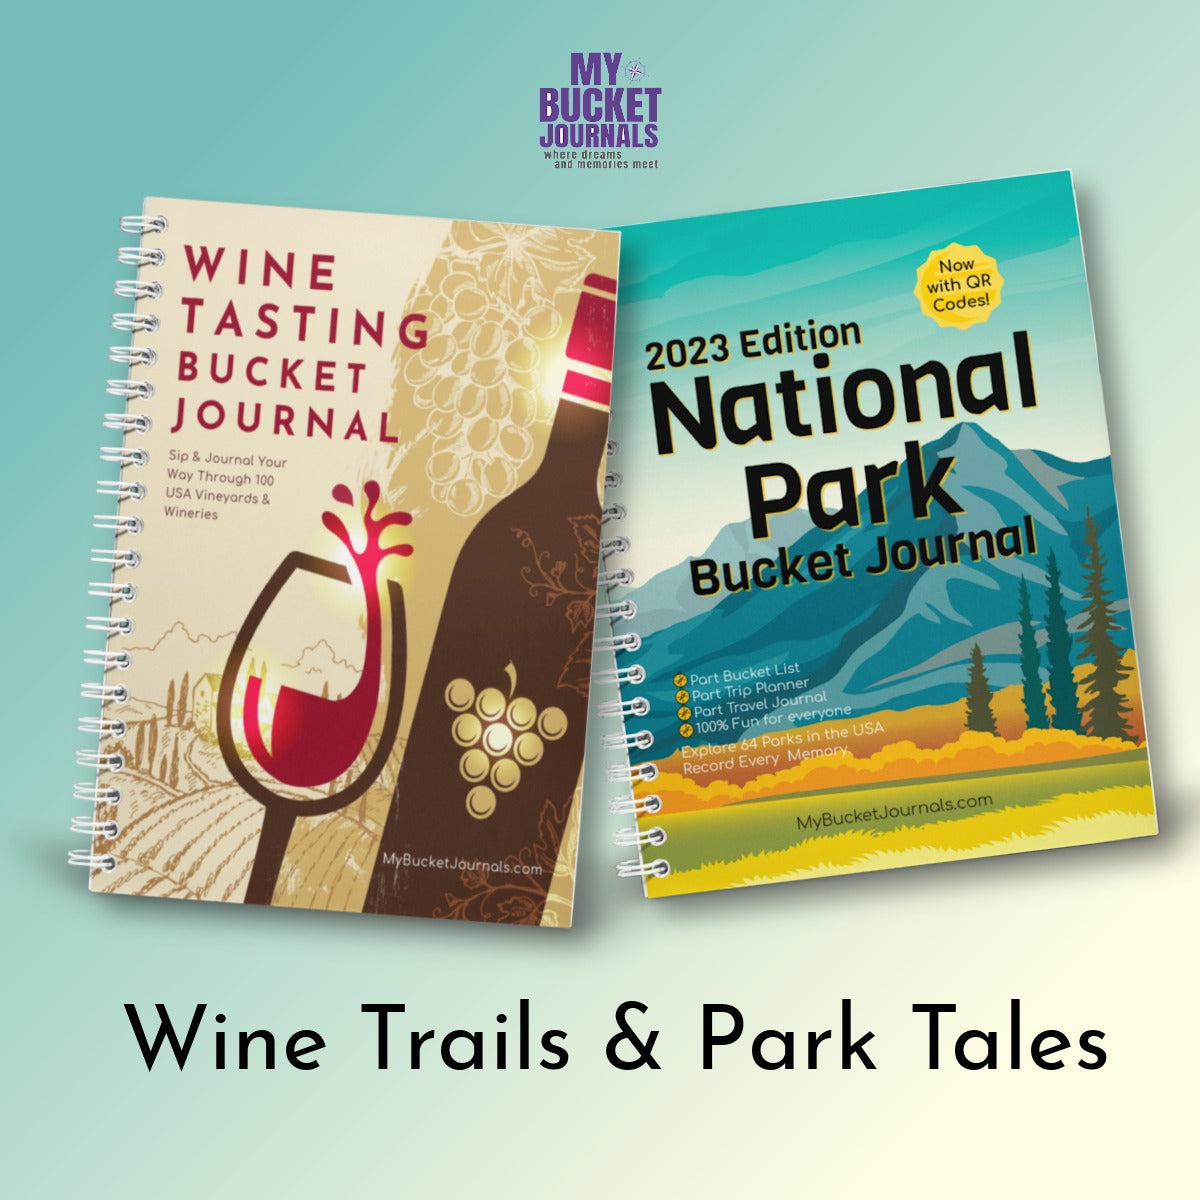 Wine Trails & Park Tales